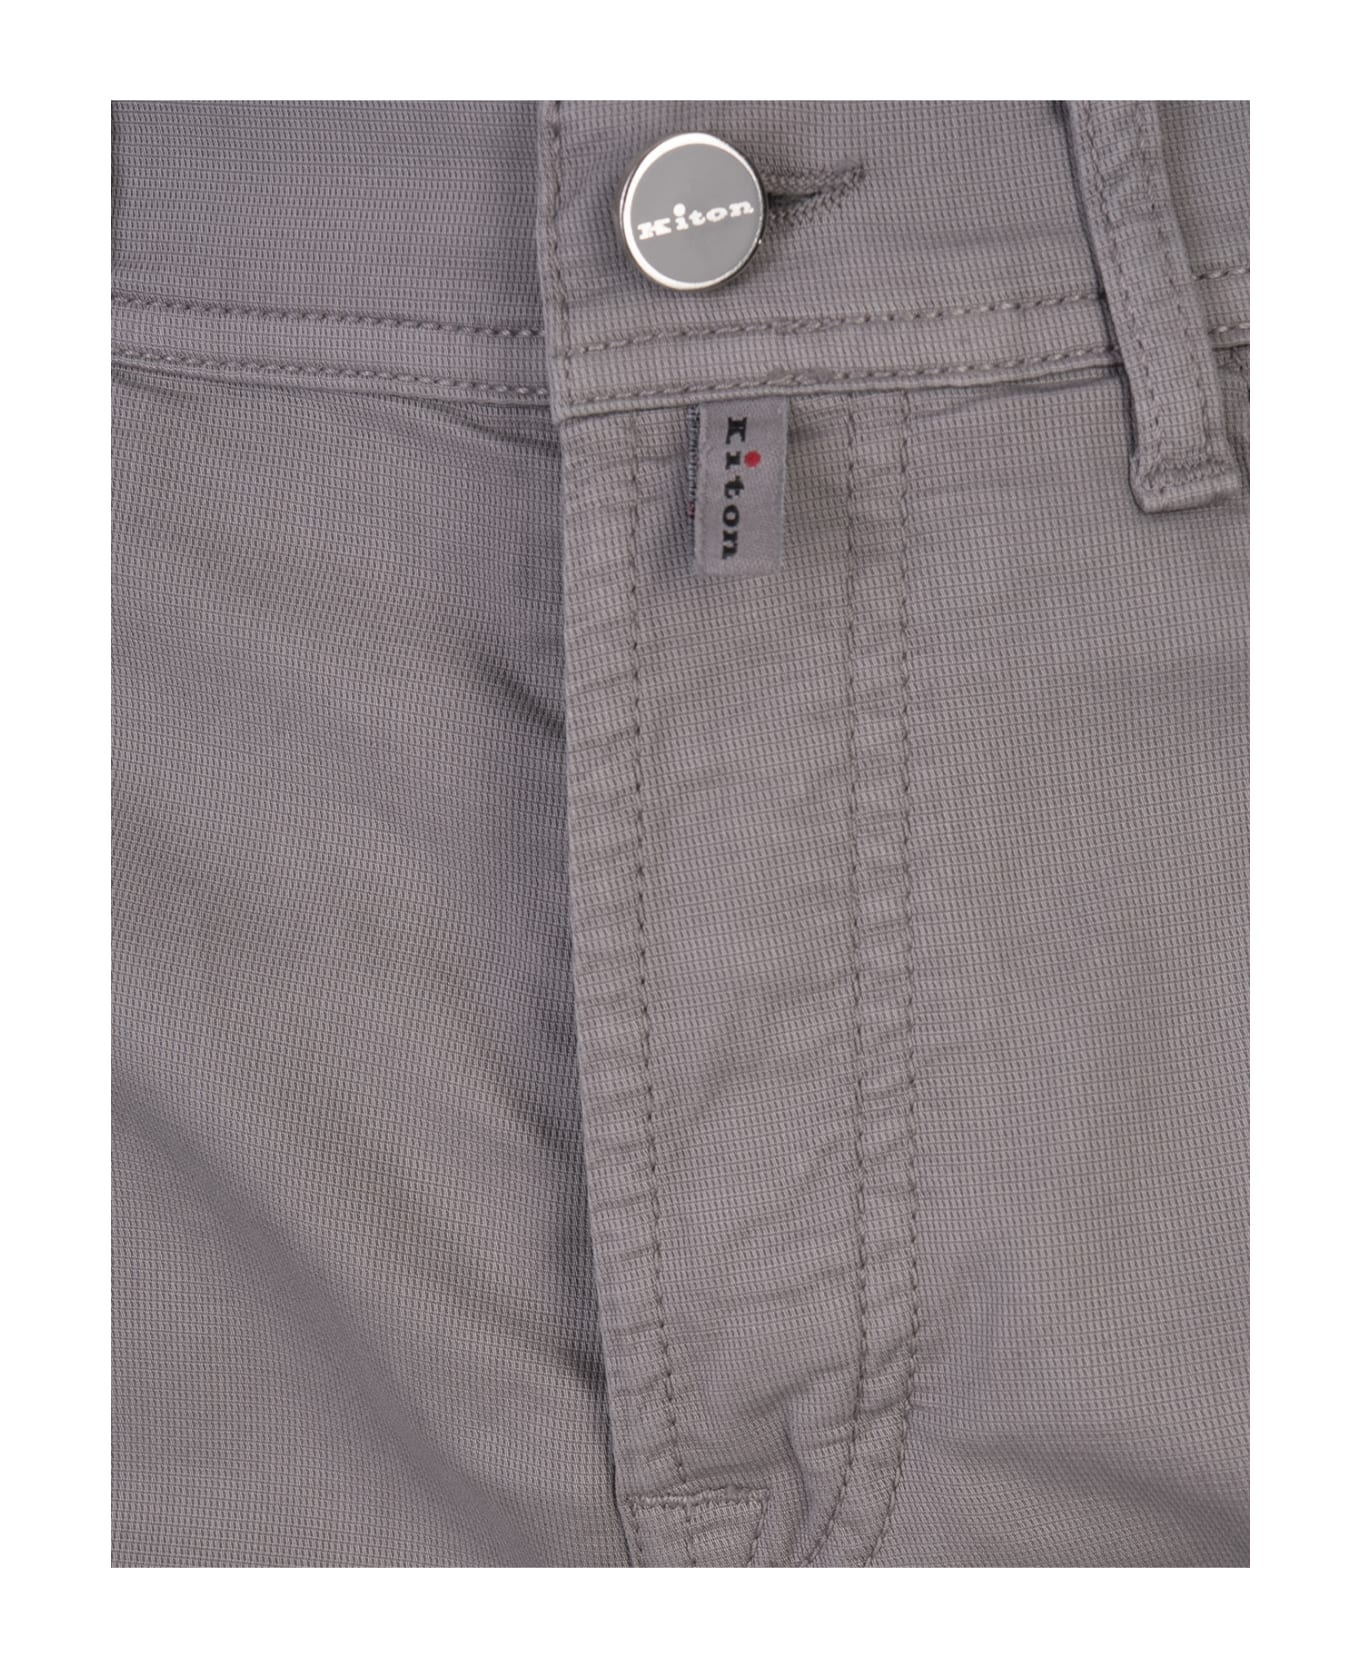 Kiton Grey 5 Pocket Straight Leg Trousers - Grey